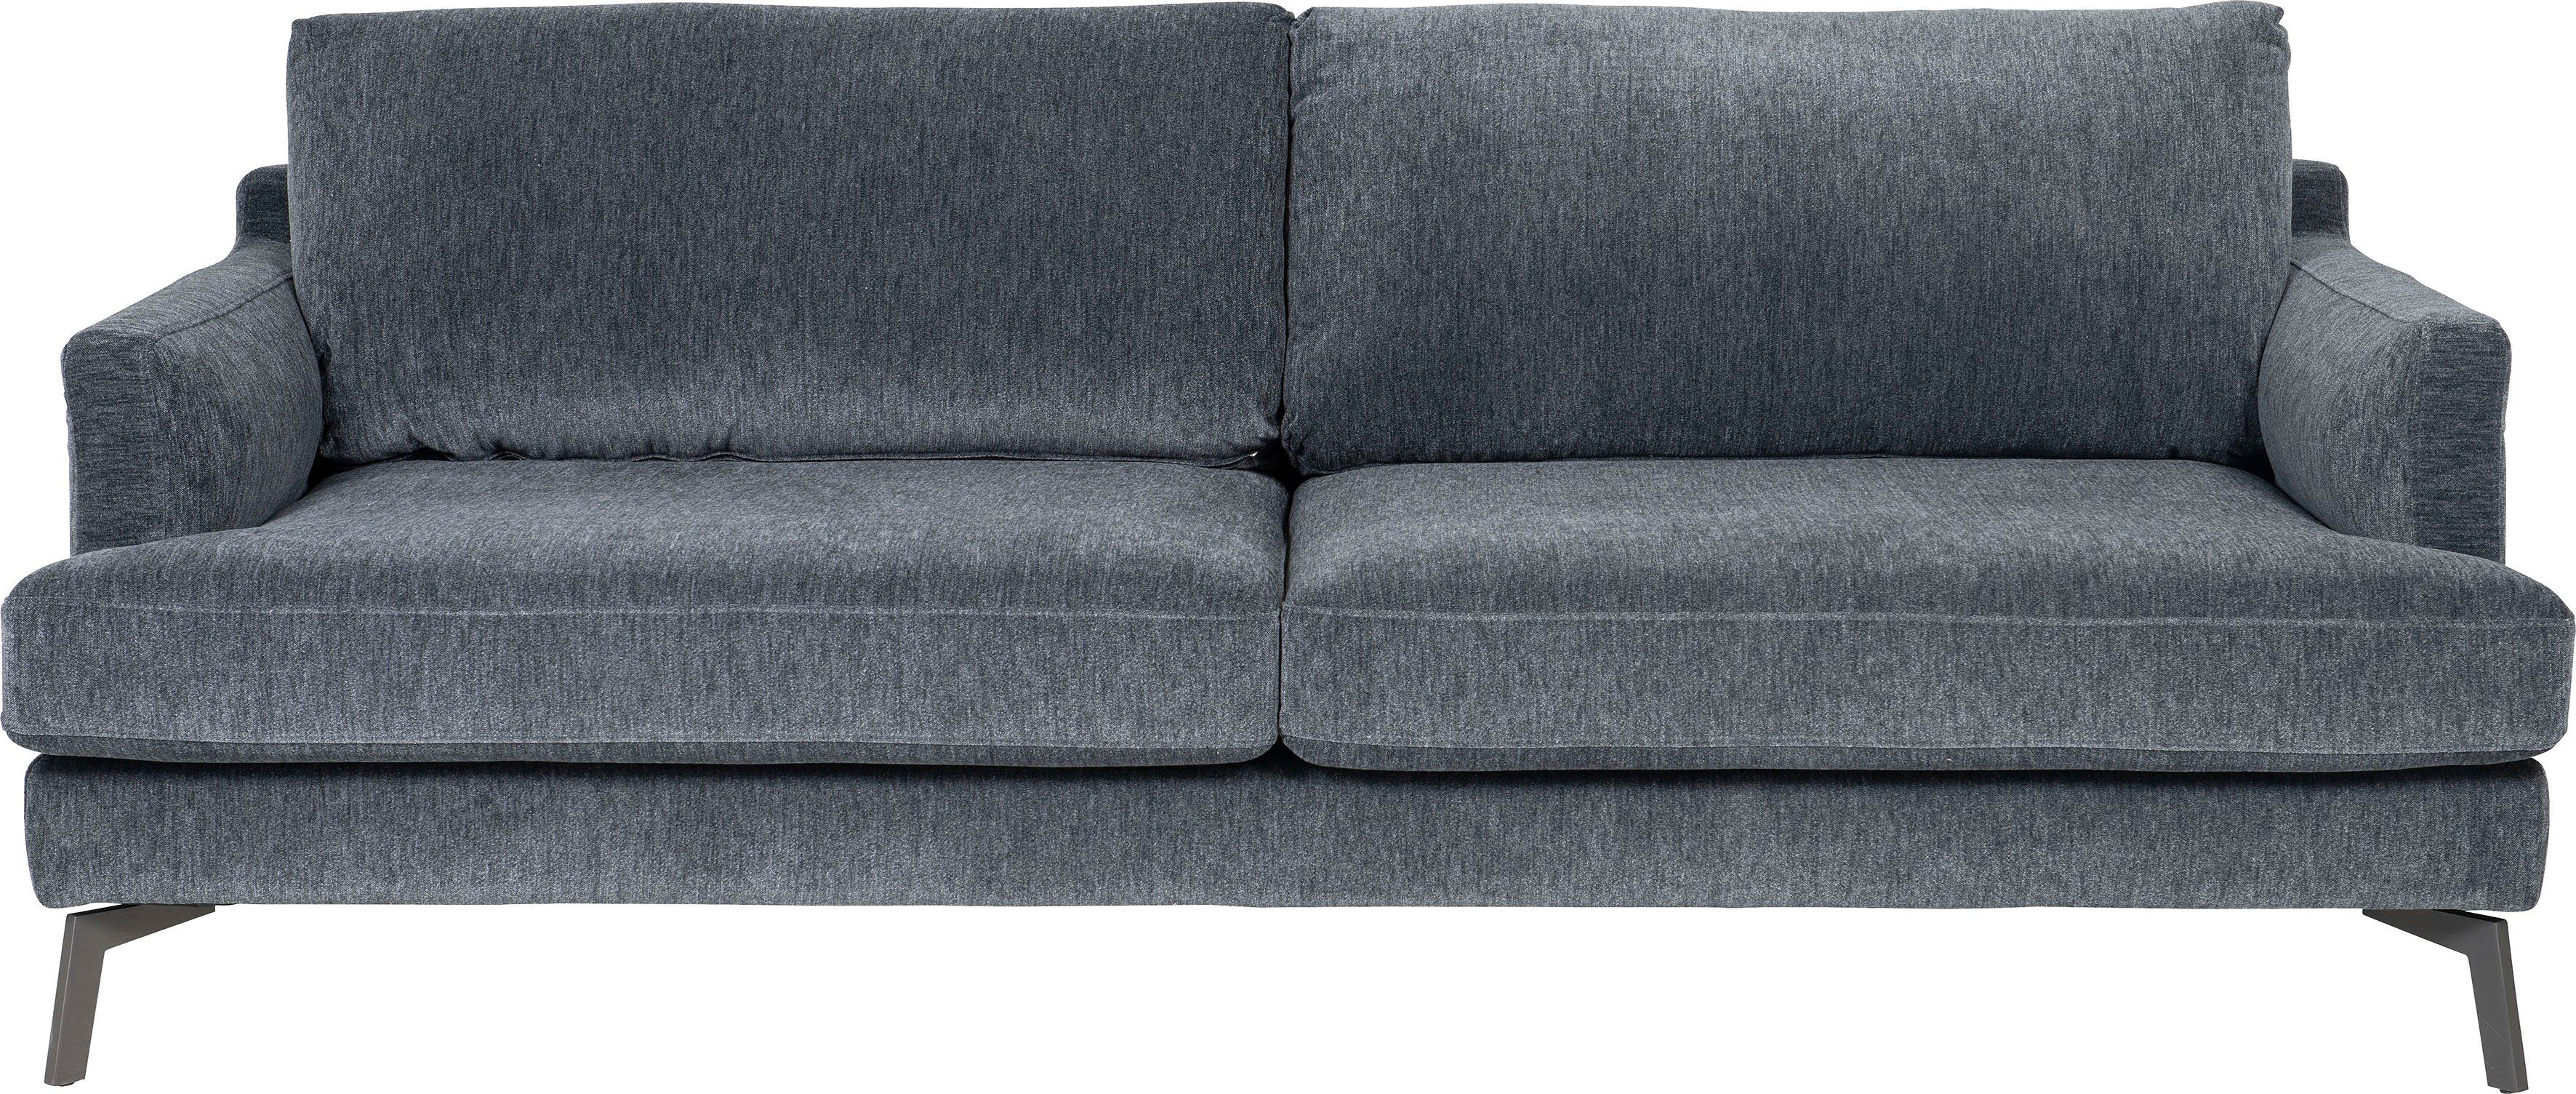 furninova 3-Sitzer Saga, ein Klassiker im skandinavischen Design grey